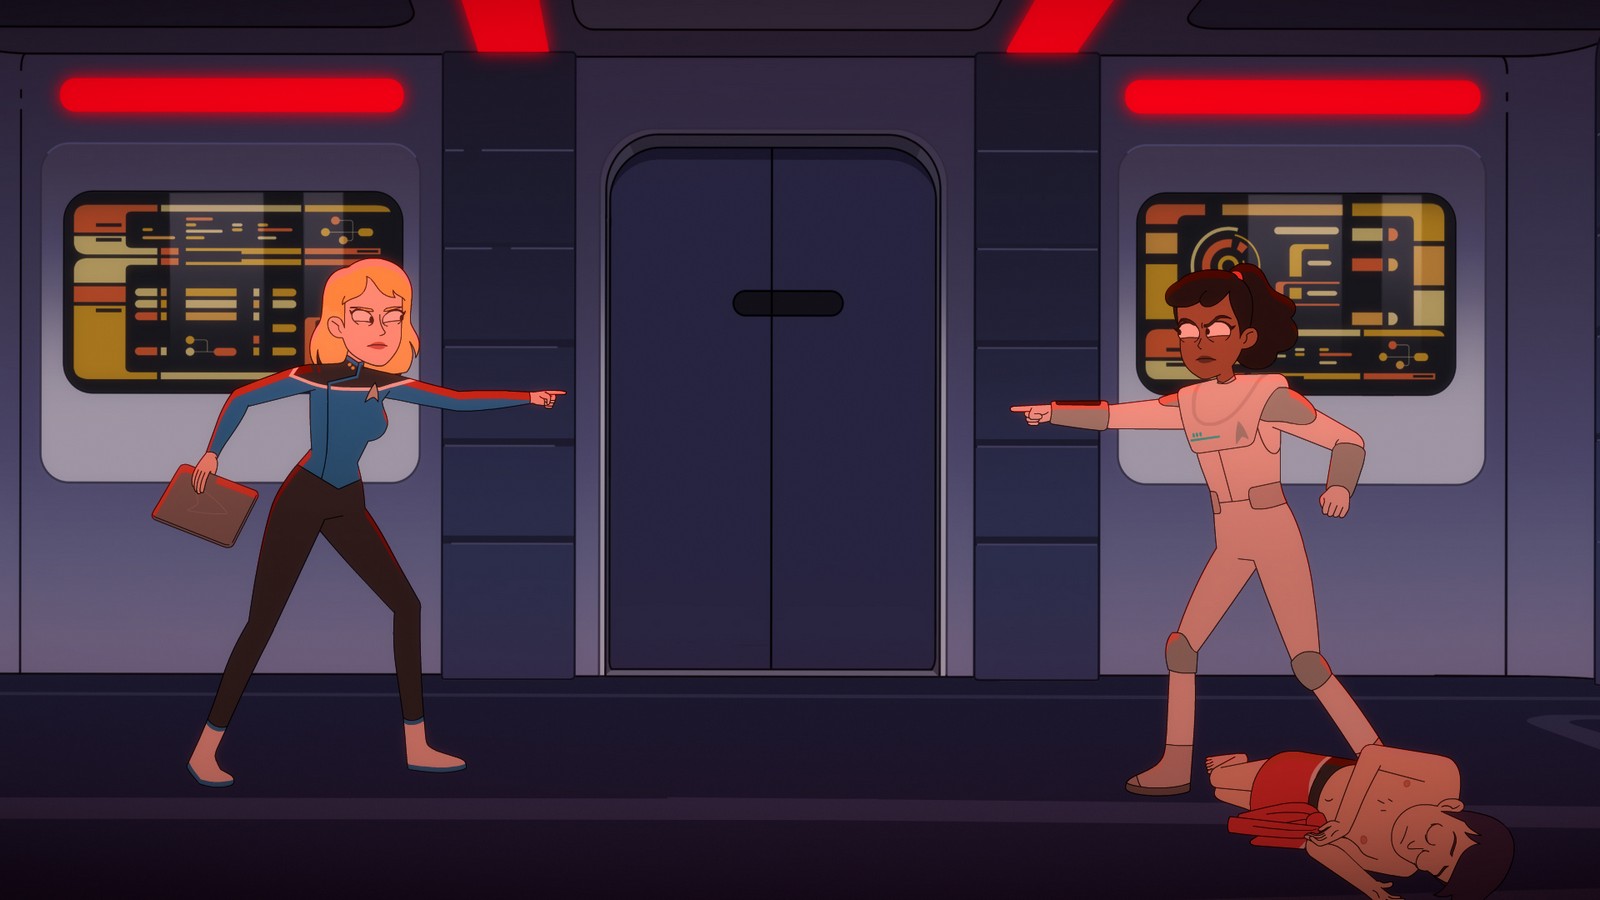 Star Trek Cartoon Nudes - Review: â€œCupid's Errant Arrowâ€ Hits Its Target In 'Star Trek: Lower Decks'  Episode 5 â€“ TrekMovie.com